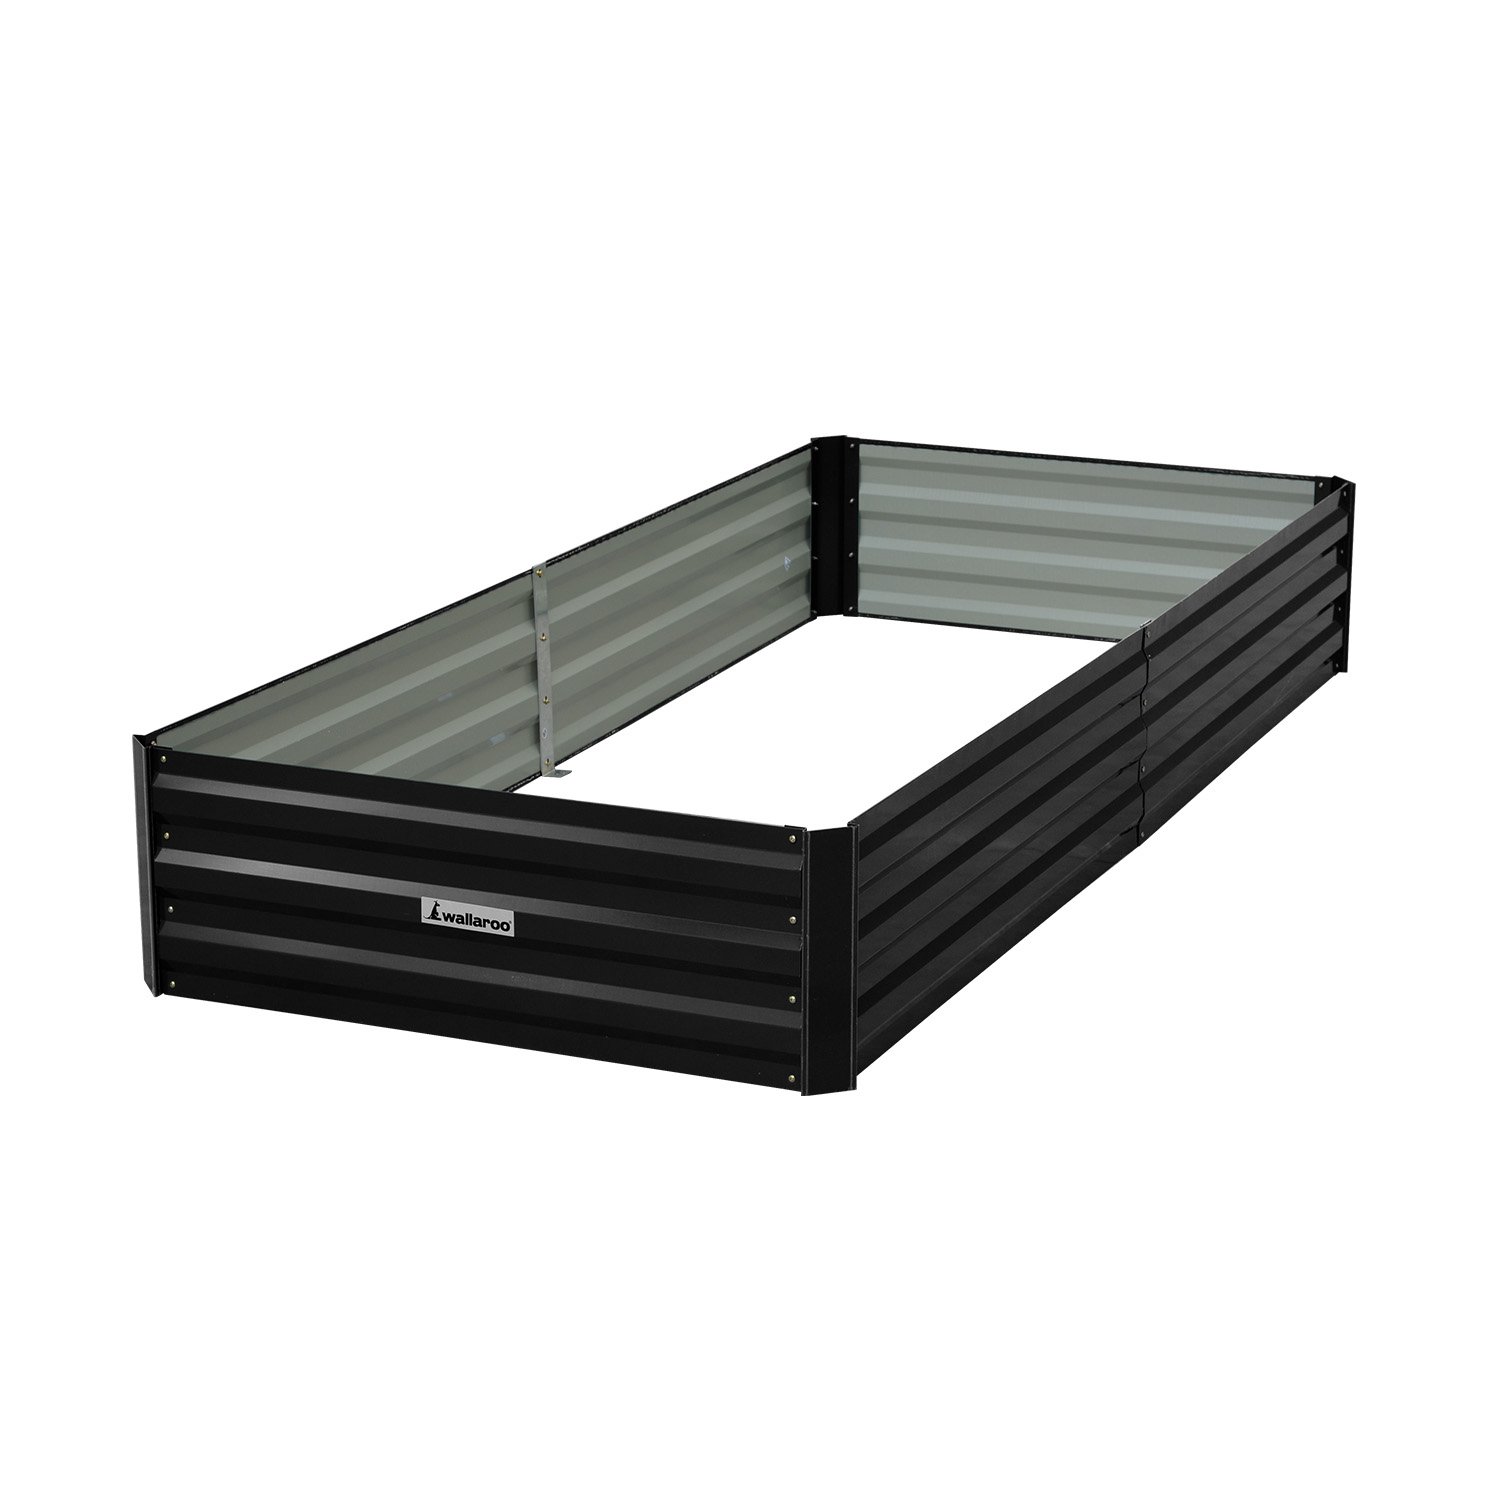 Wallaroo Garden Bed 210 x 90 x 30cm Galvanized Steel - Black 2